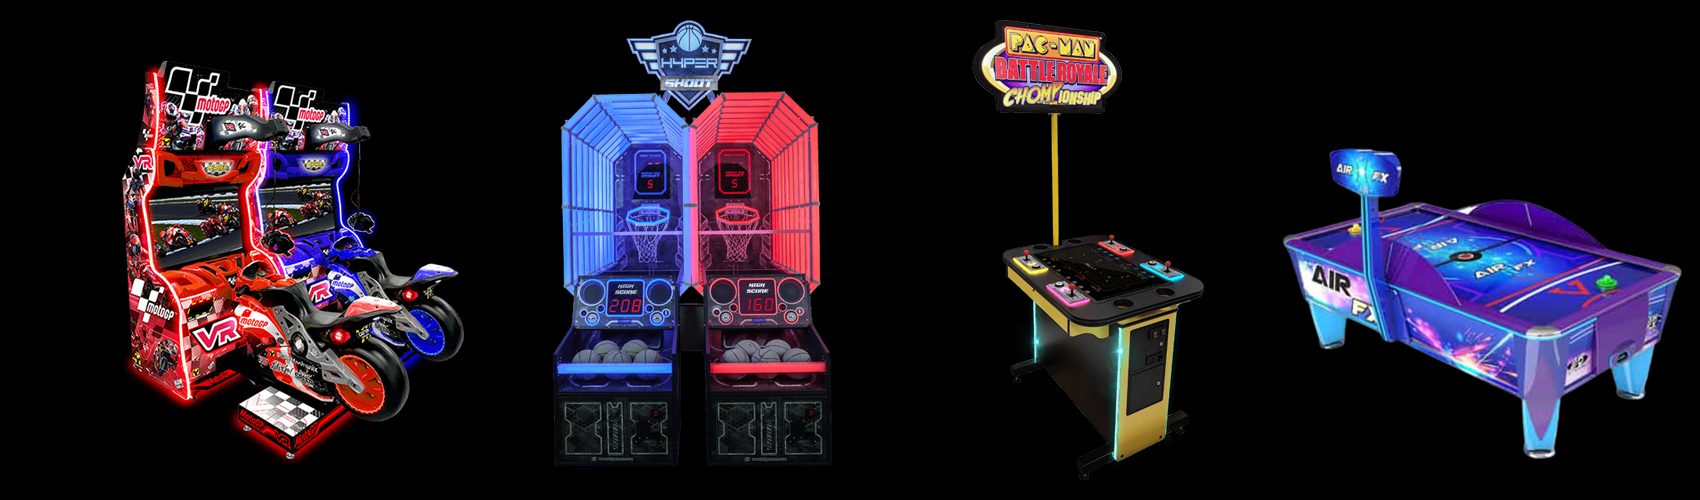 Arcade Modern Games